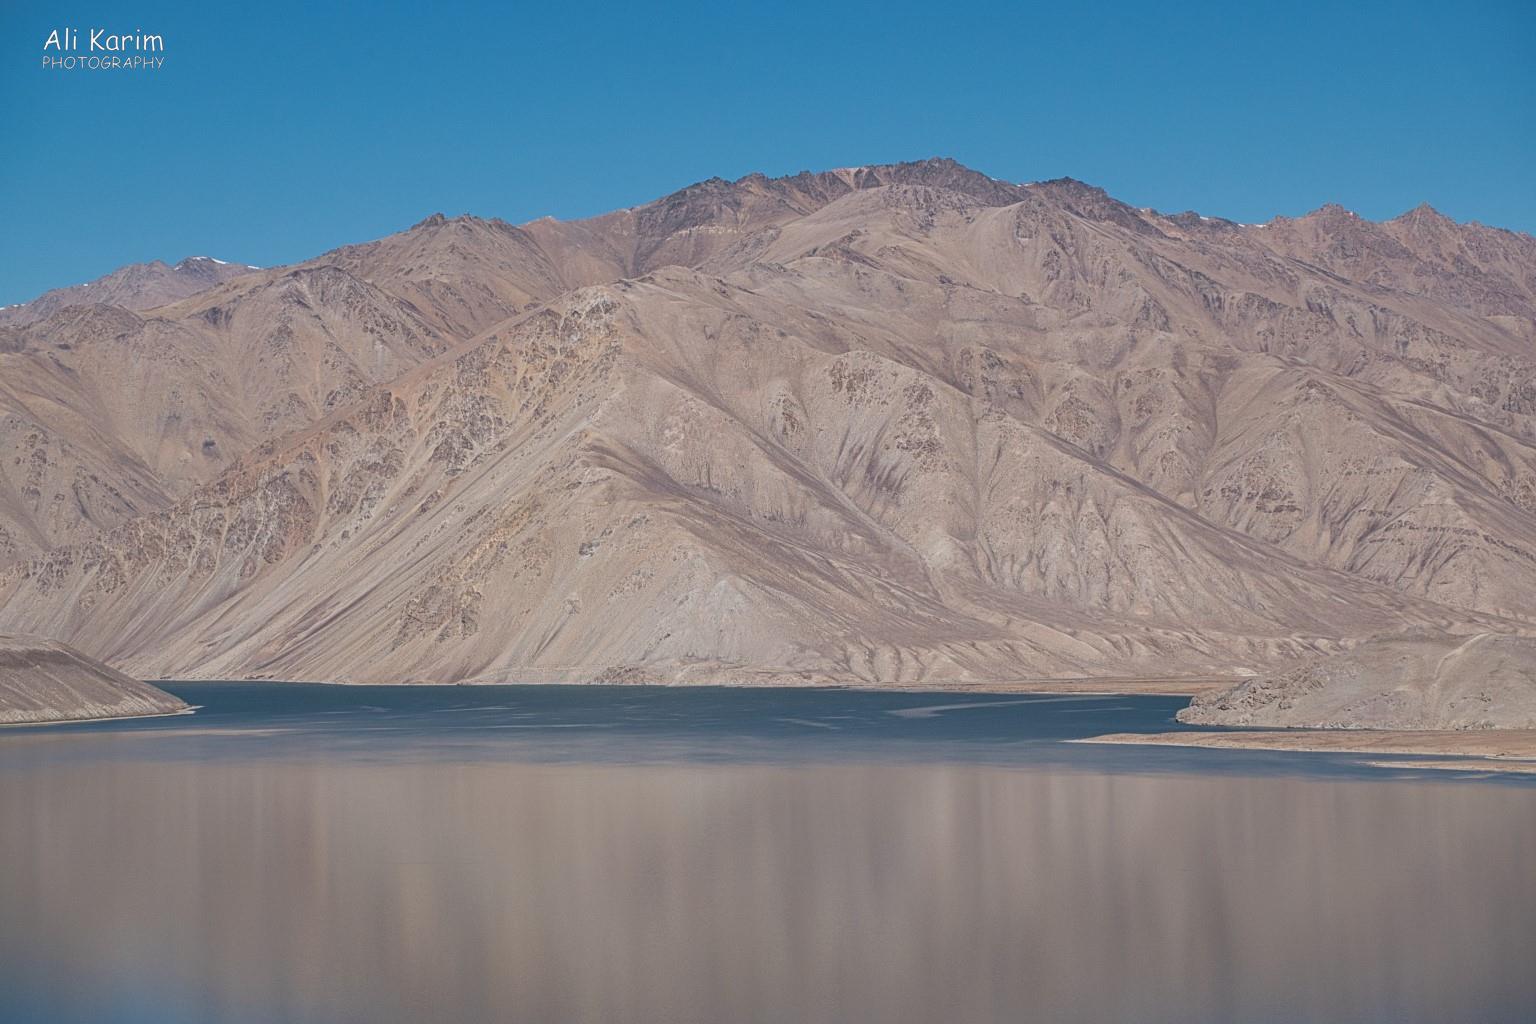 Langar, Tajikistan, Beautiful Yashikul, and reflection of the mountain